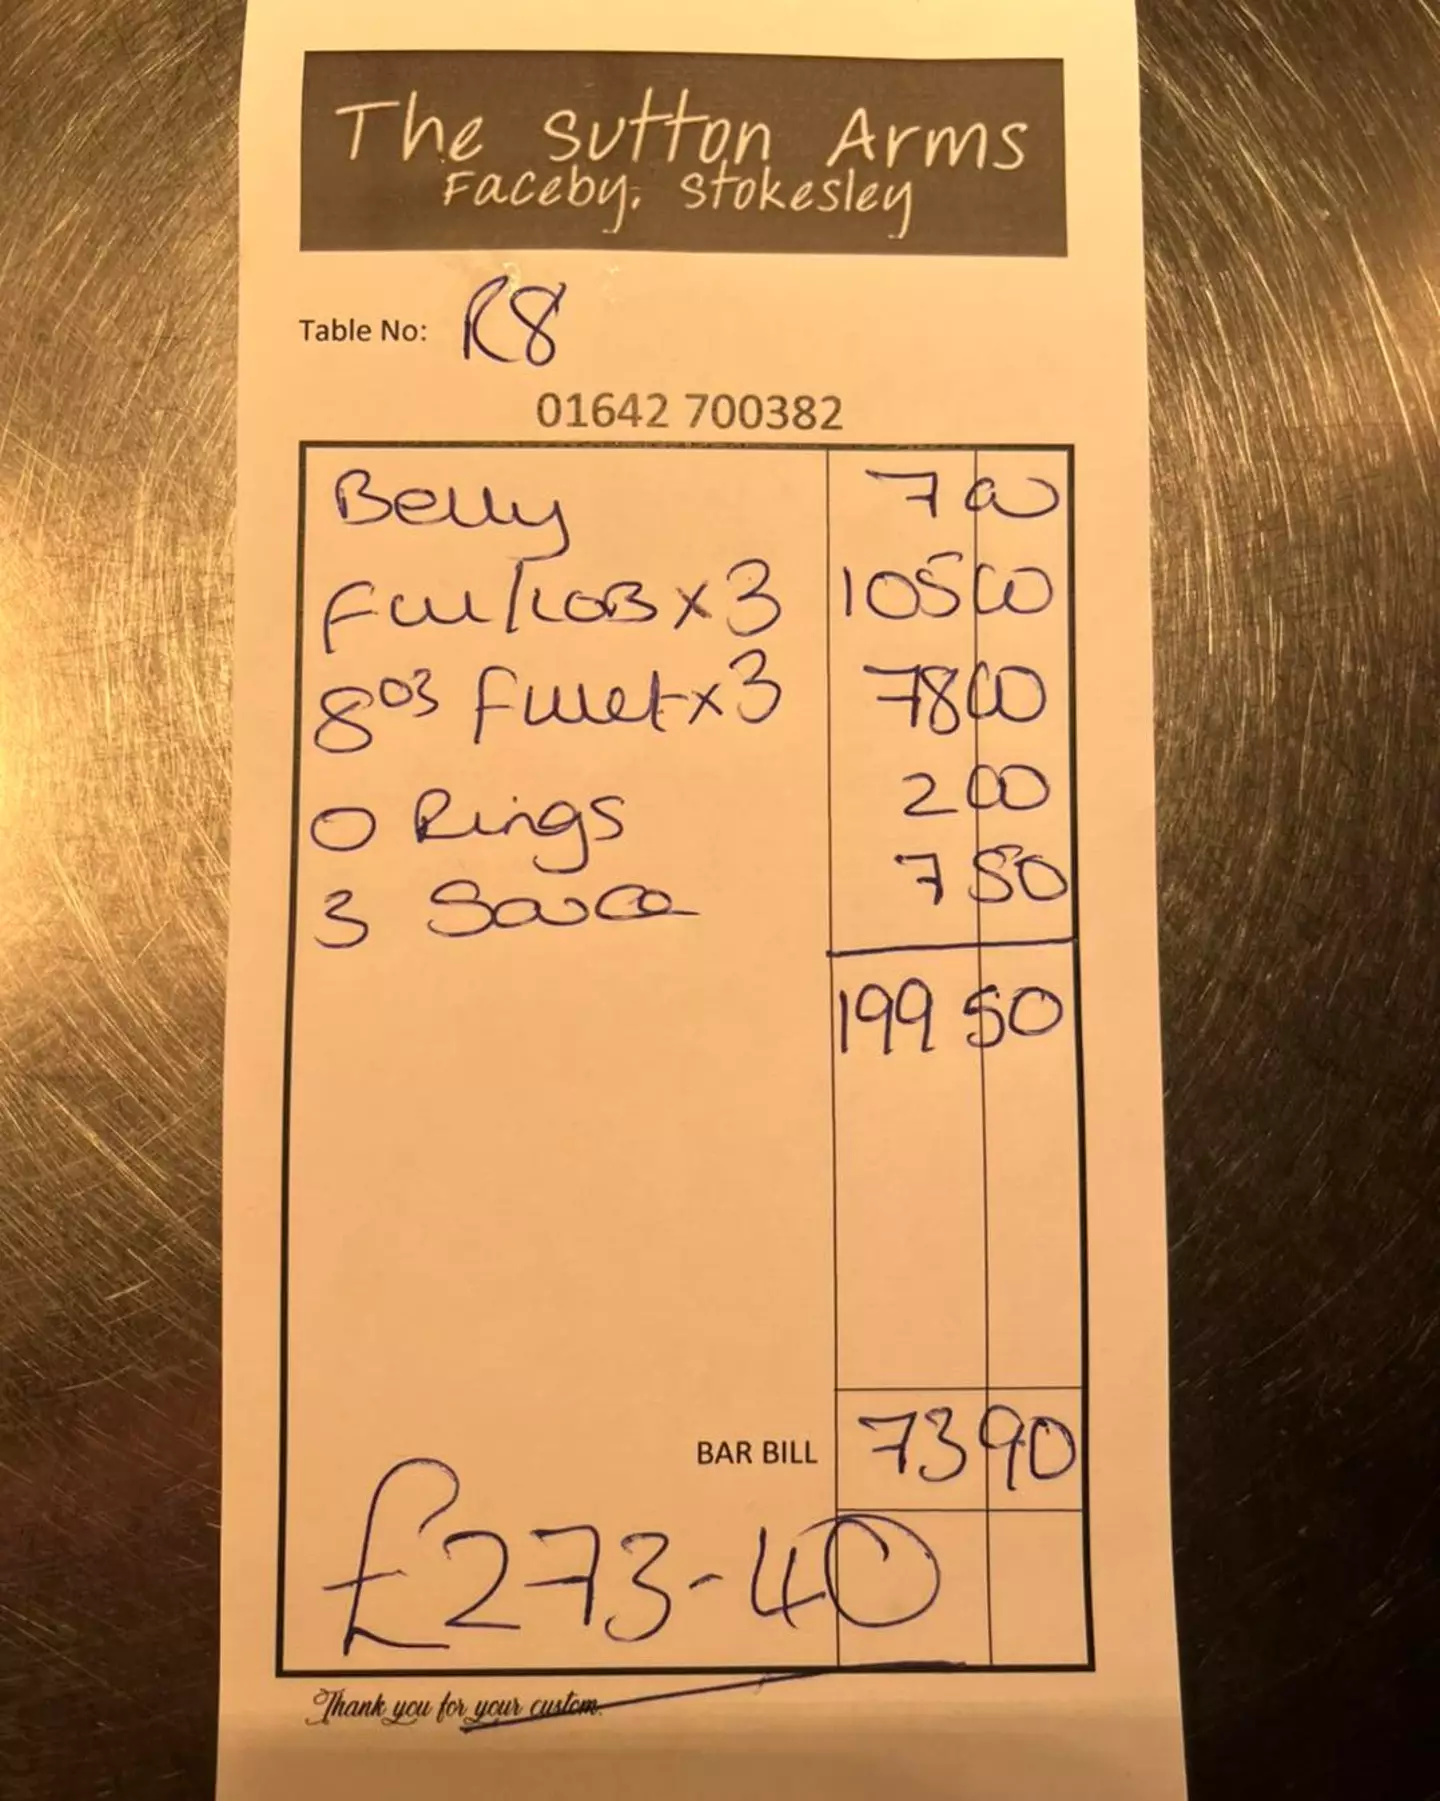 The bill went unpaid.